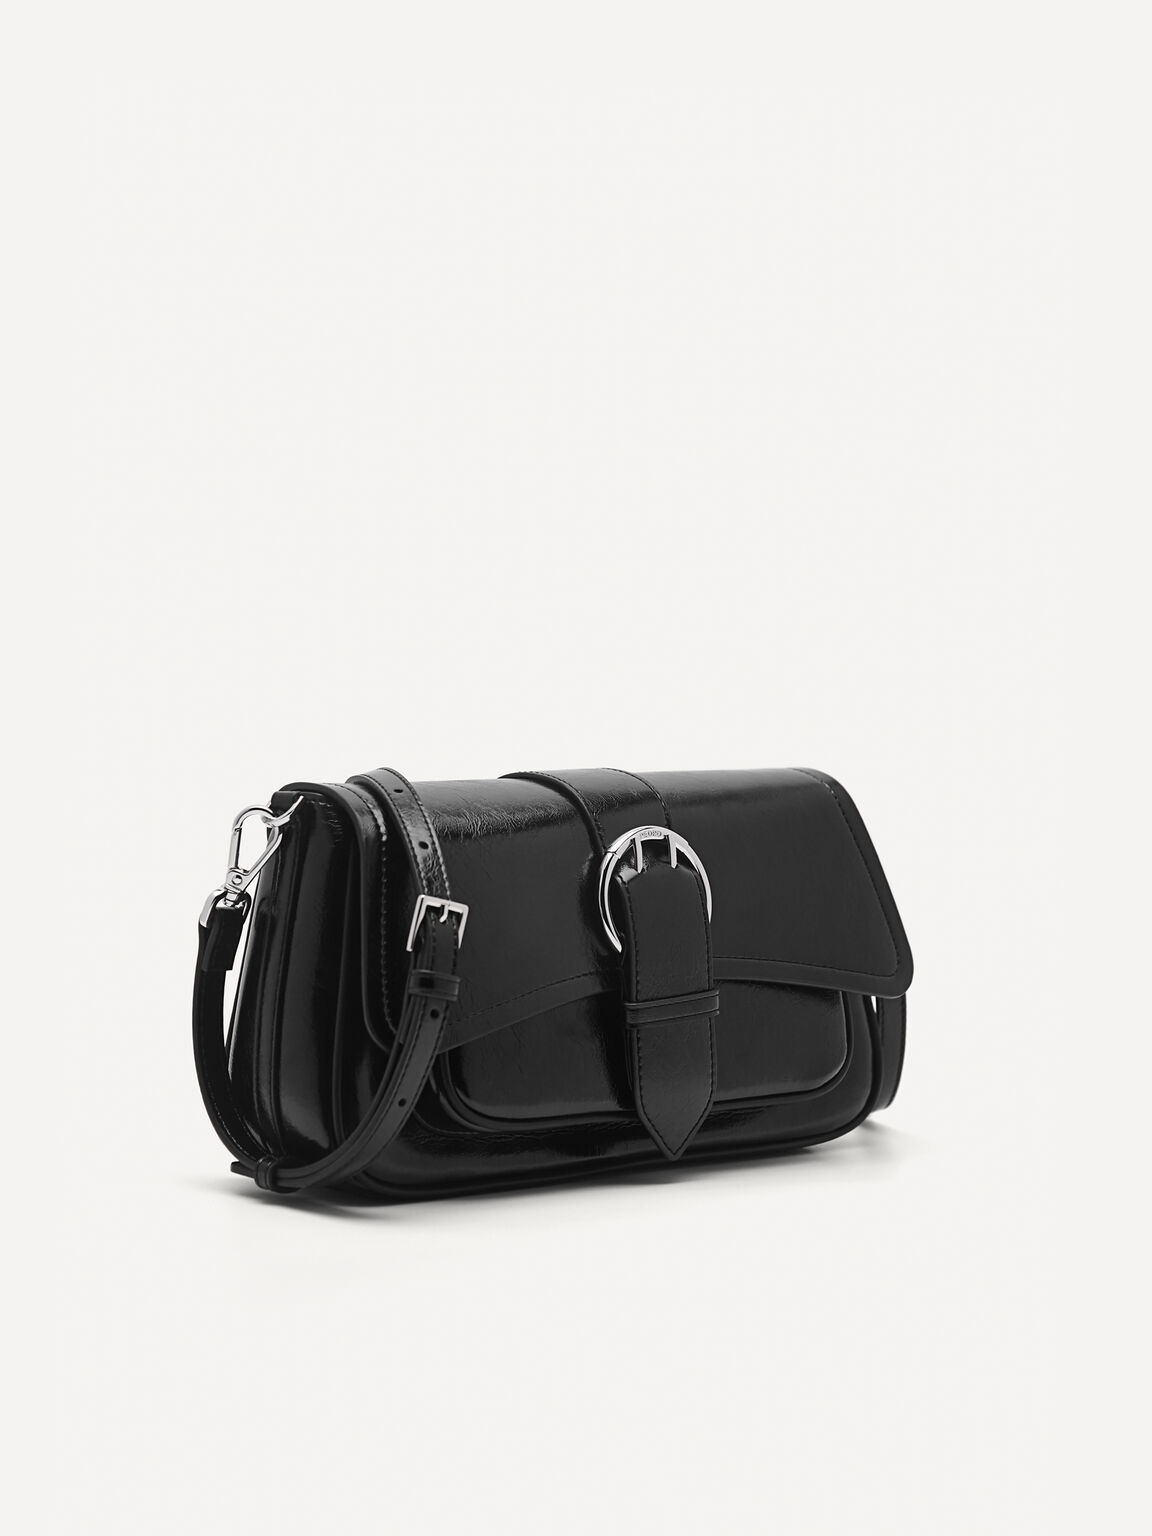 Buckle Shoulder Bag with Chain Detail, Black